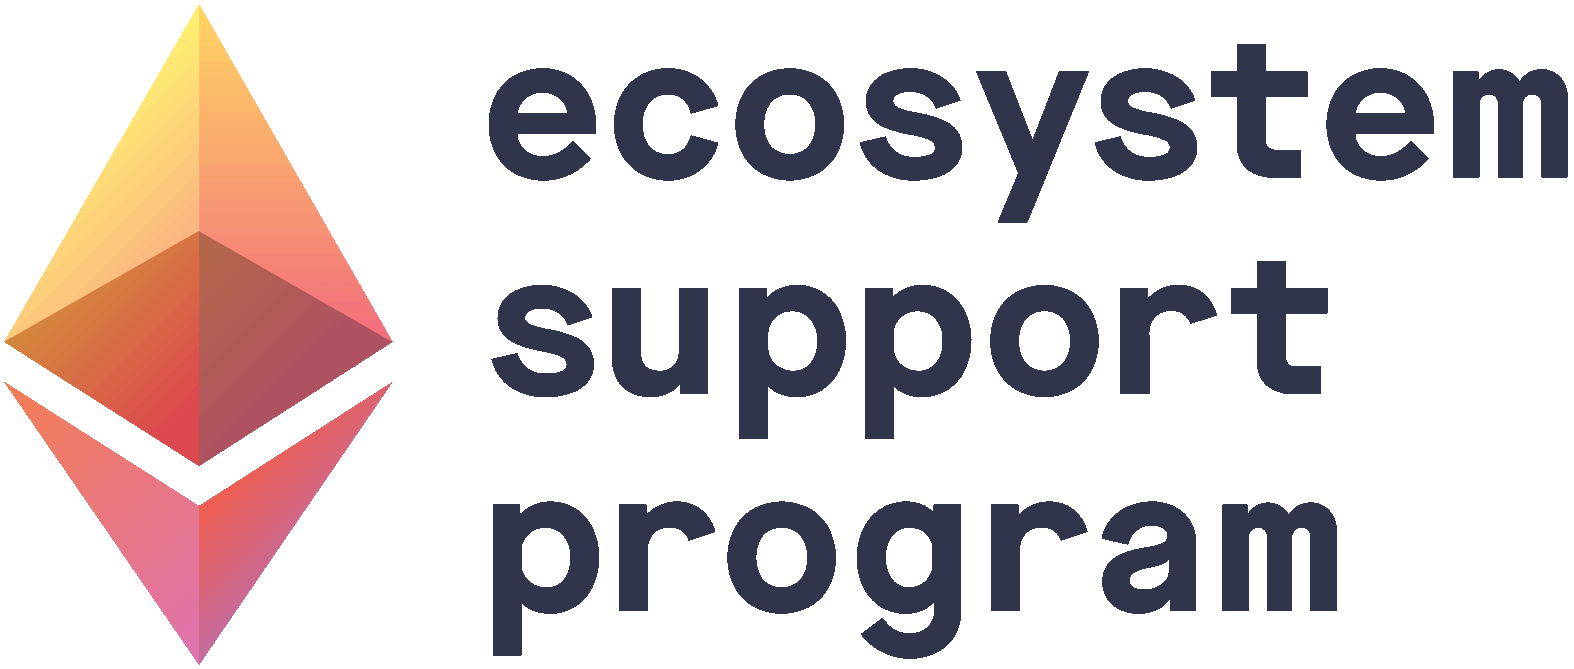 EF Ecosystem Support Program